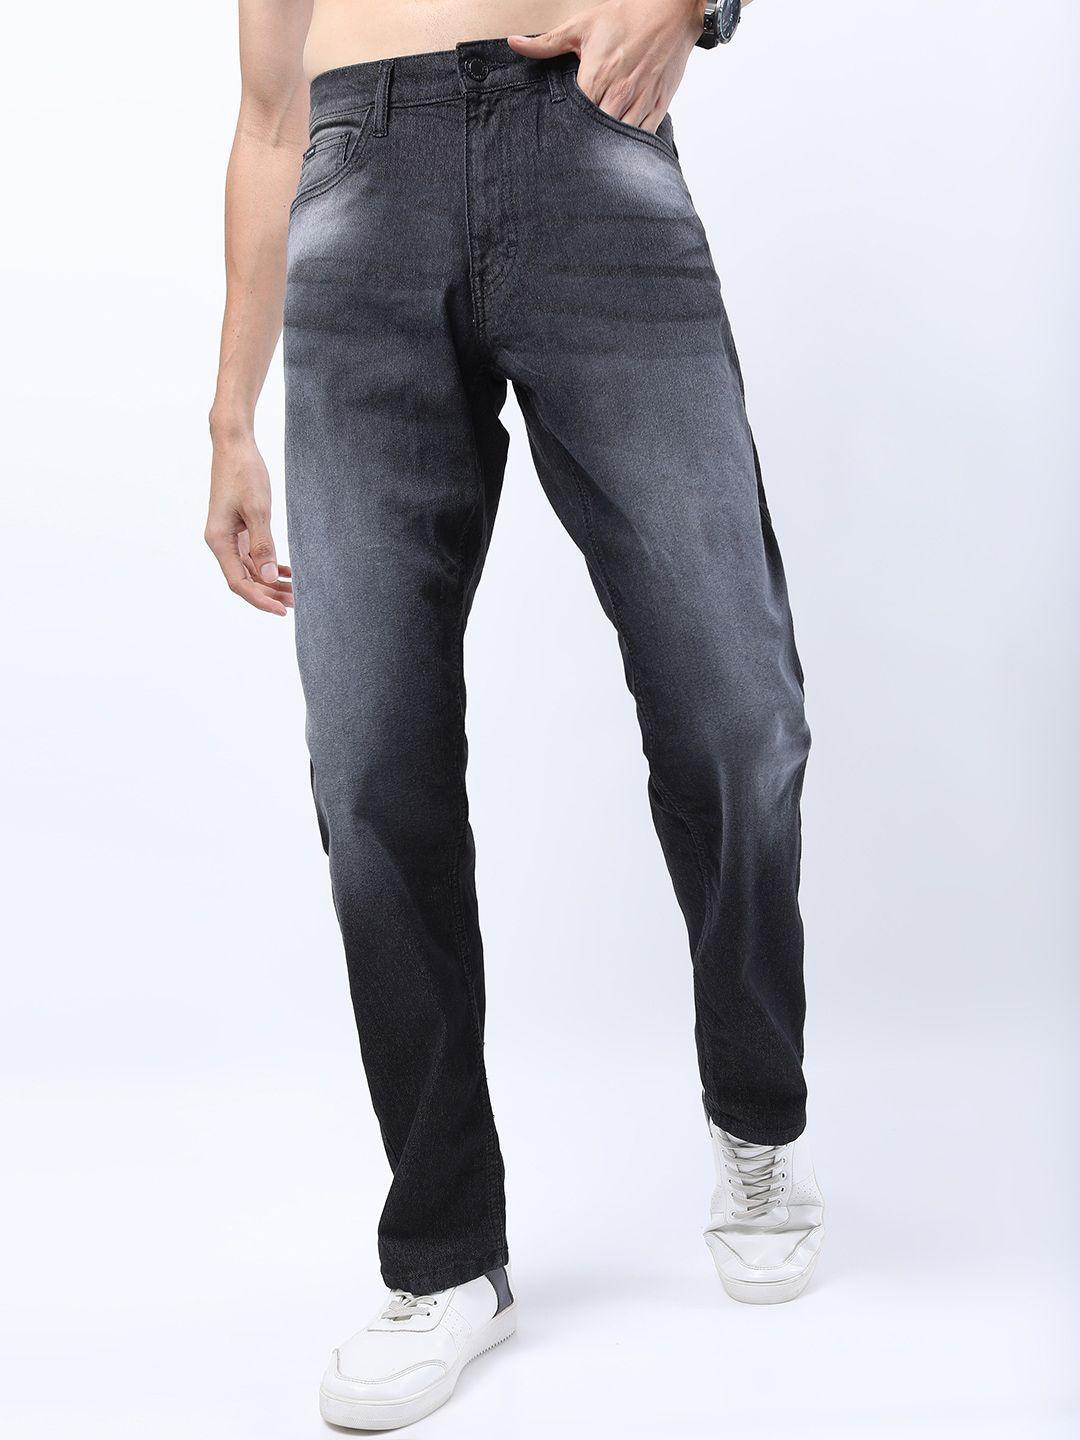 highlander-men-black-straight-fit-clean-look-light-fade-stretchable-jeans